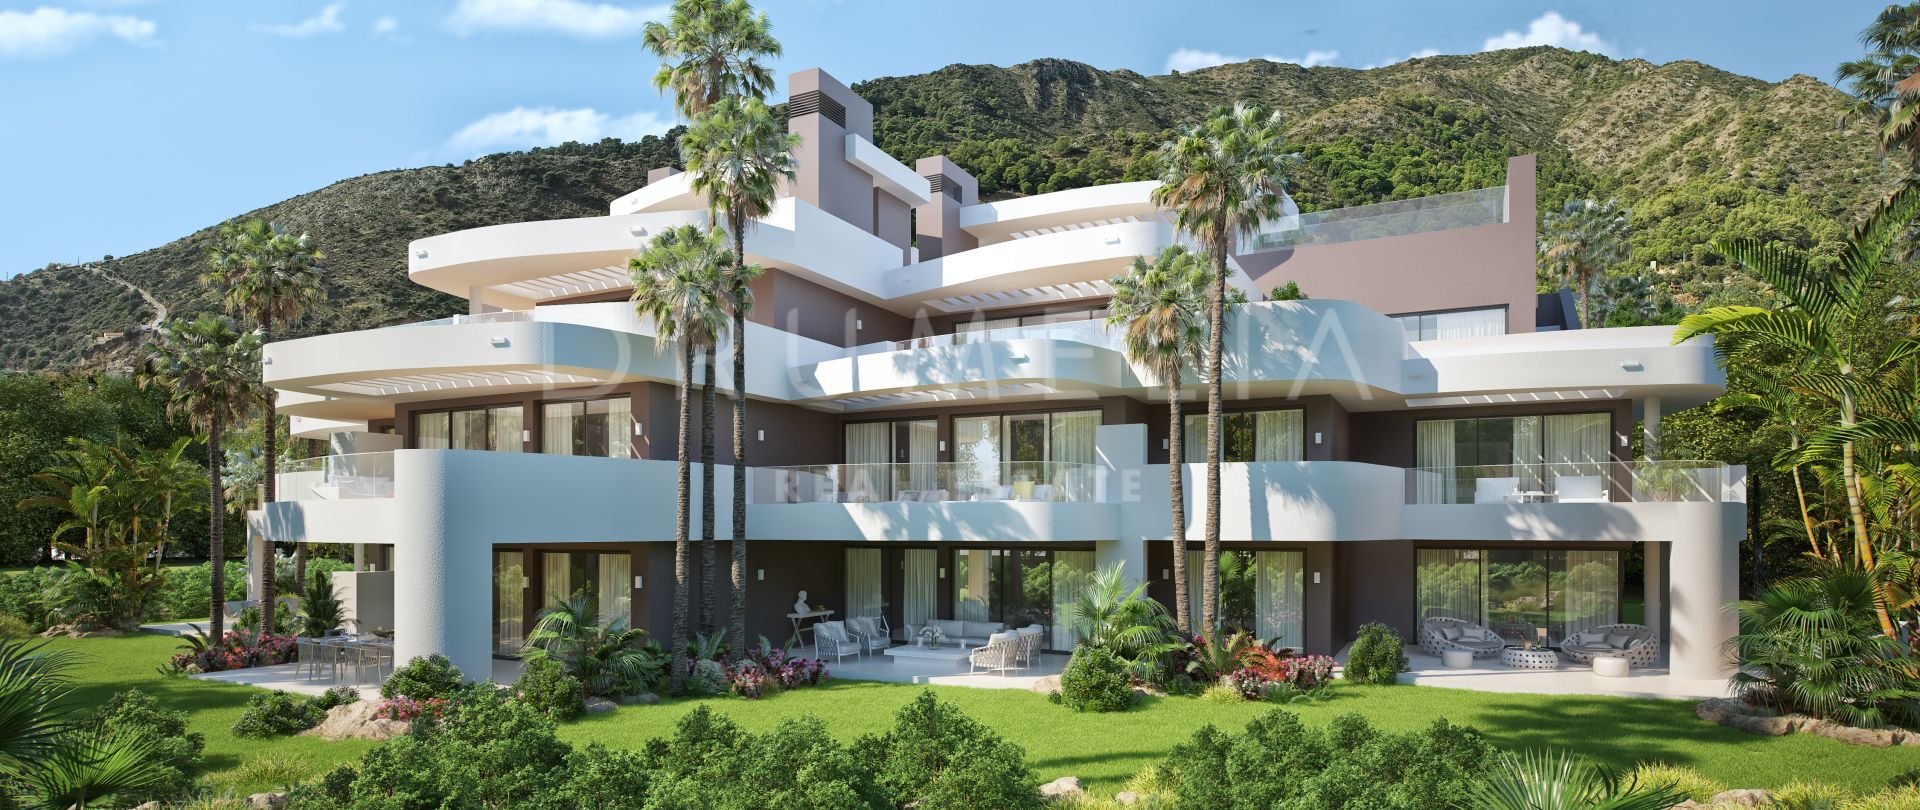 Superbe Duplex Penthouse moderne hors plan à vendre à Marbella